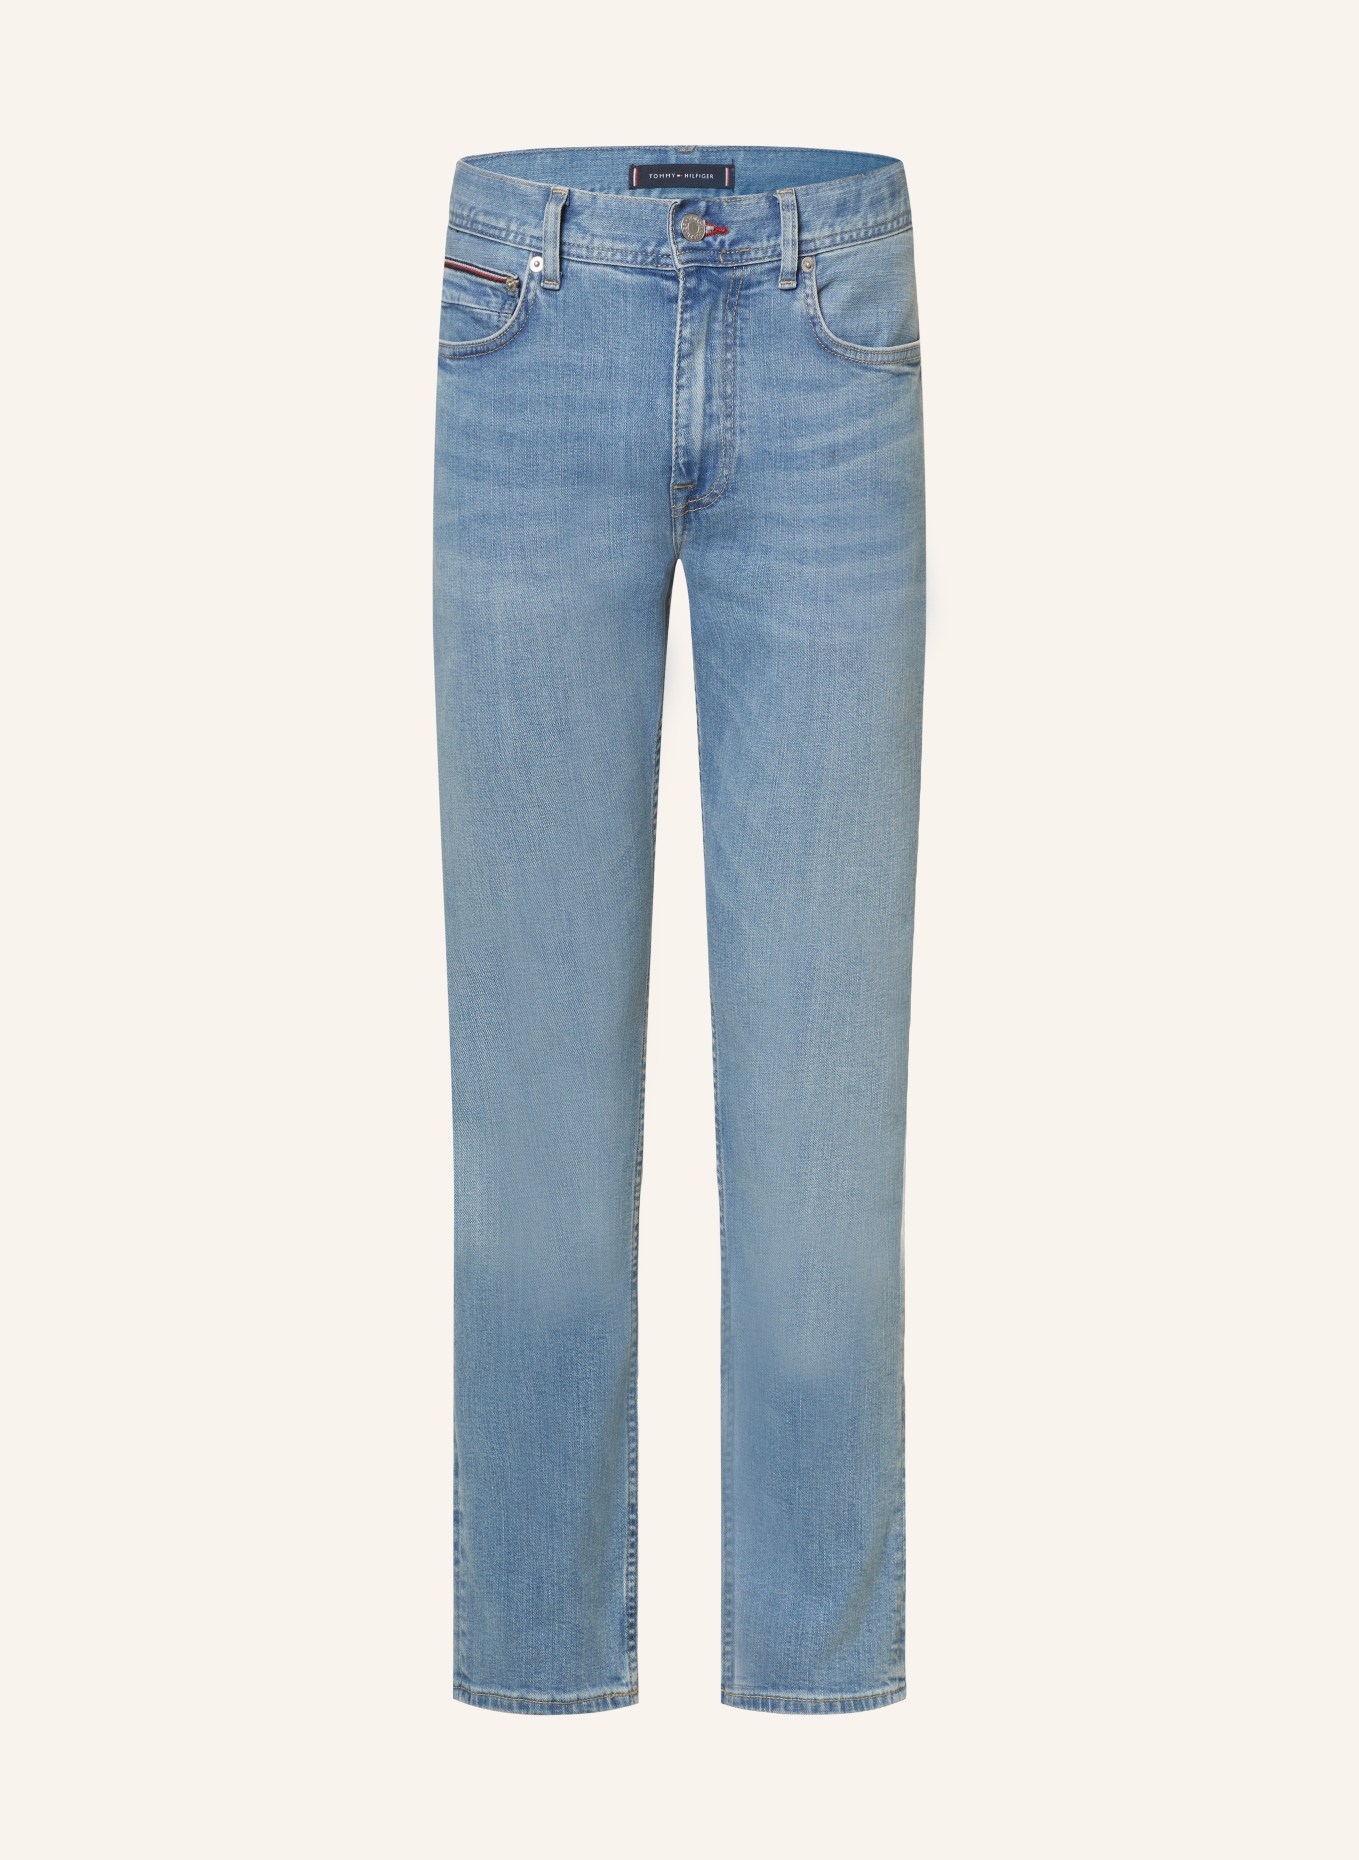 TOMMY HILFIGER Jeans DENTON Straight Fit, Farbe: 1AA Amston Blue (Bild 1)